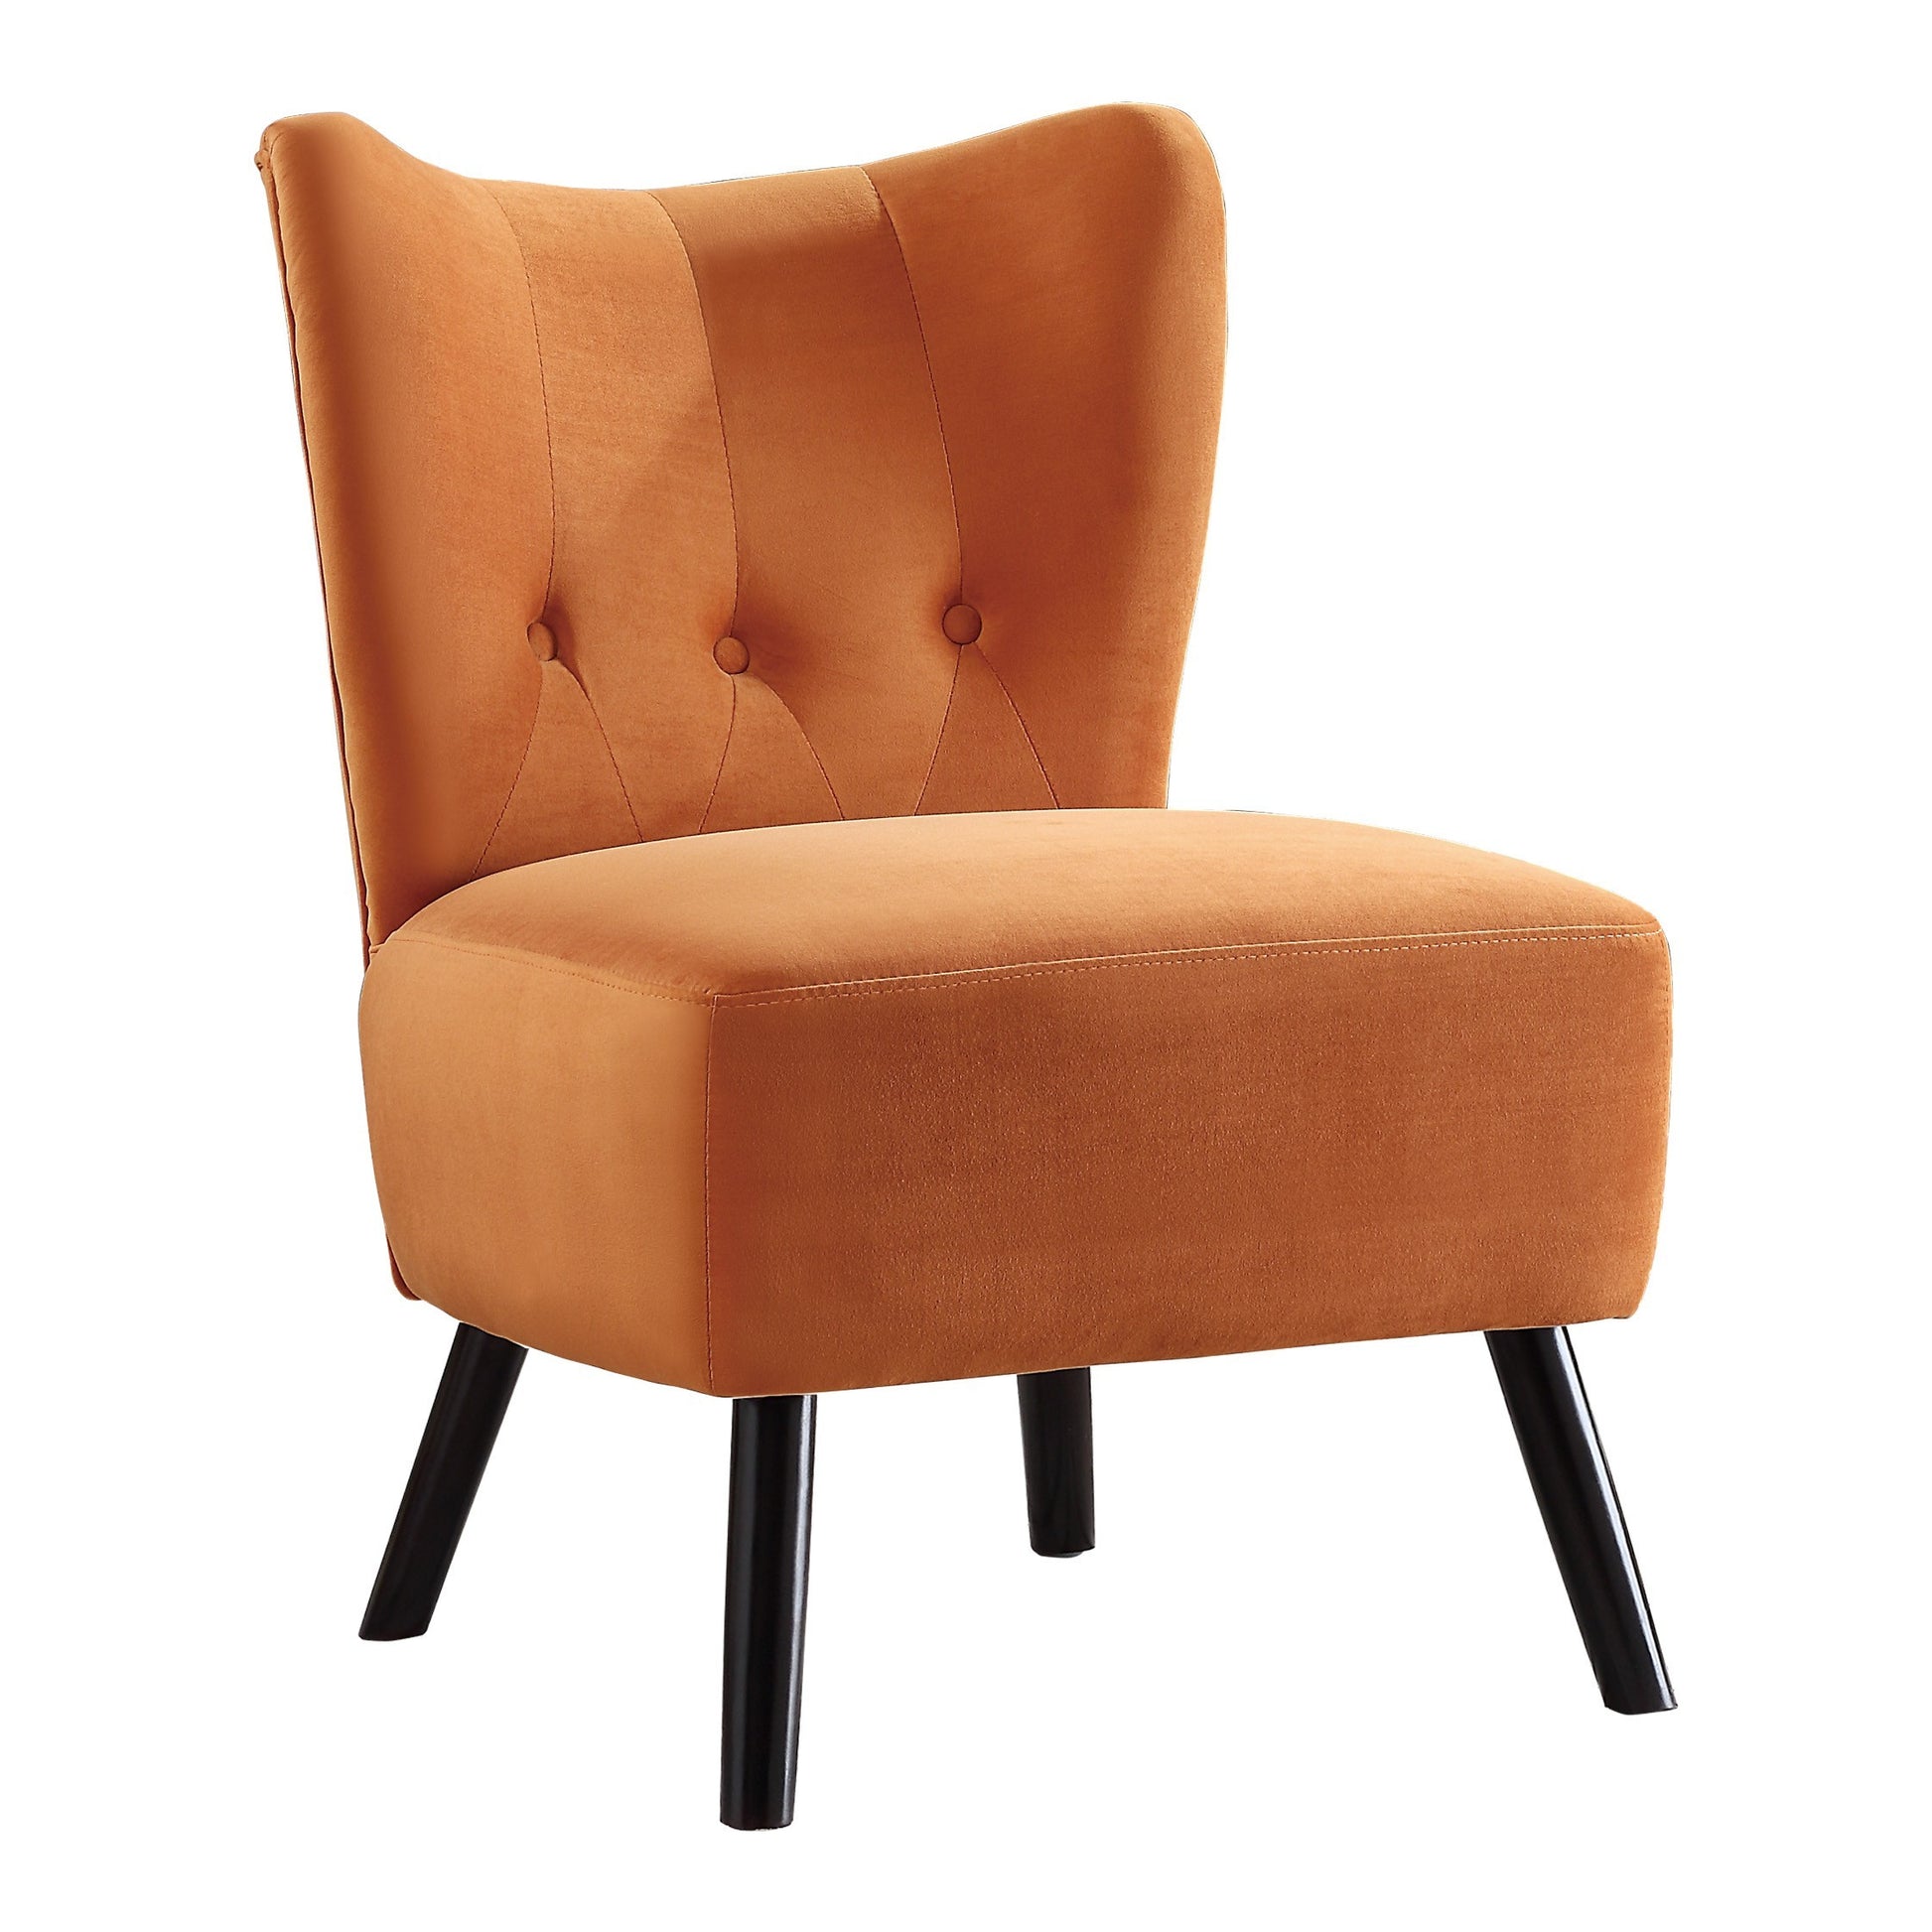 Unique Style Orange Velvet Covering Accent Chair orange-primary living space-modern-retro-solid